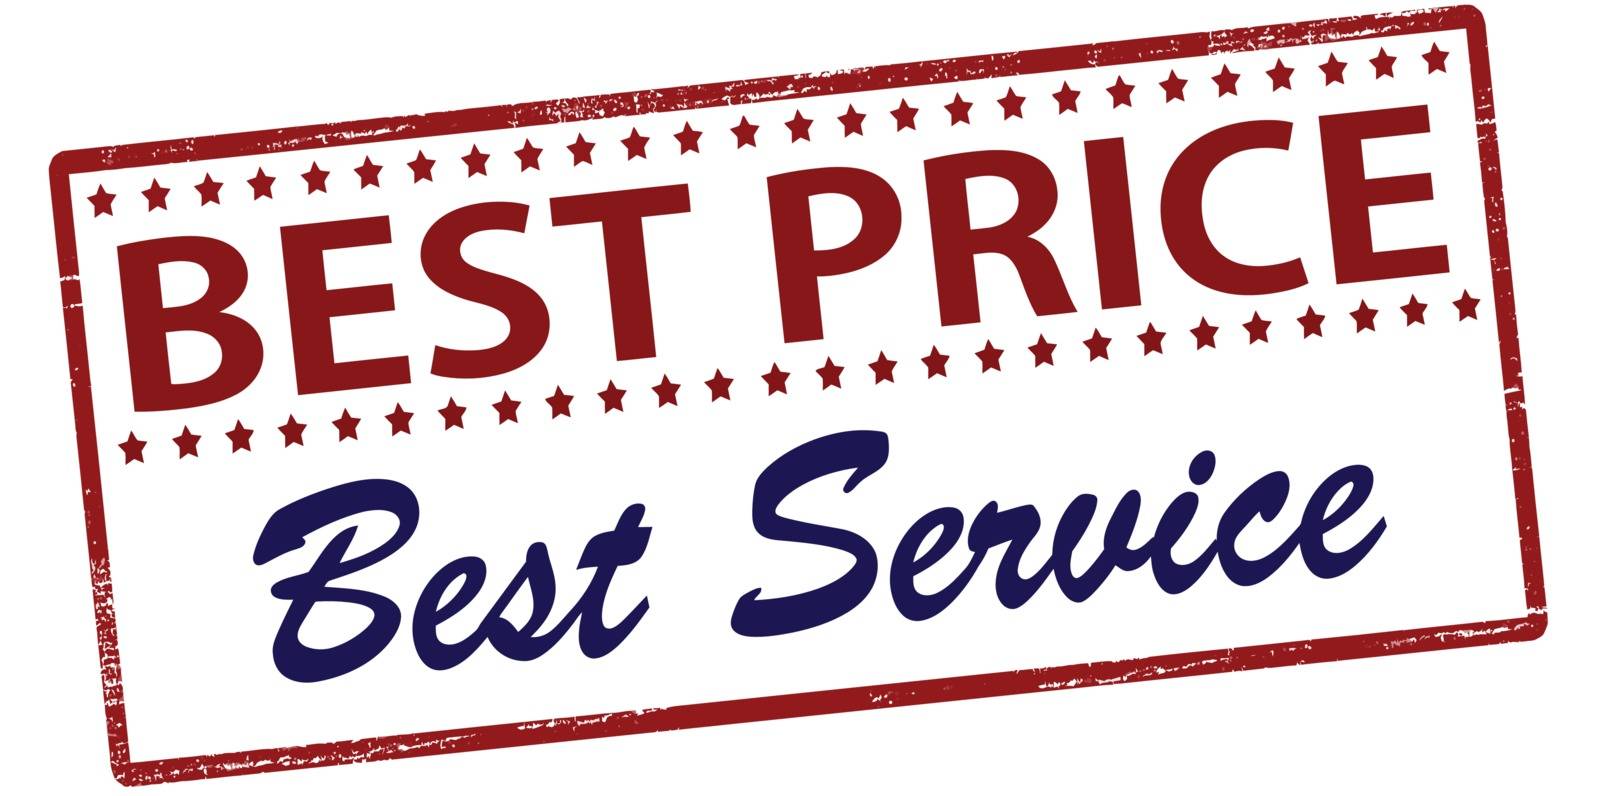 Best price best service by carmenbobo